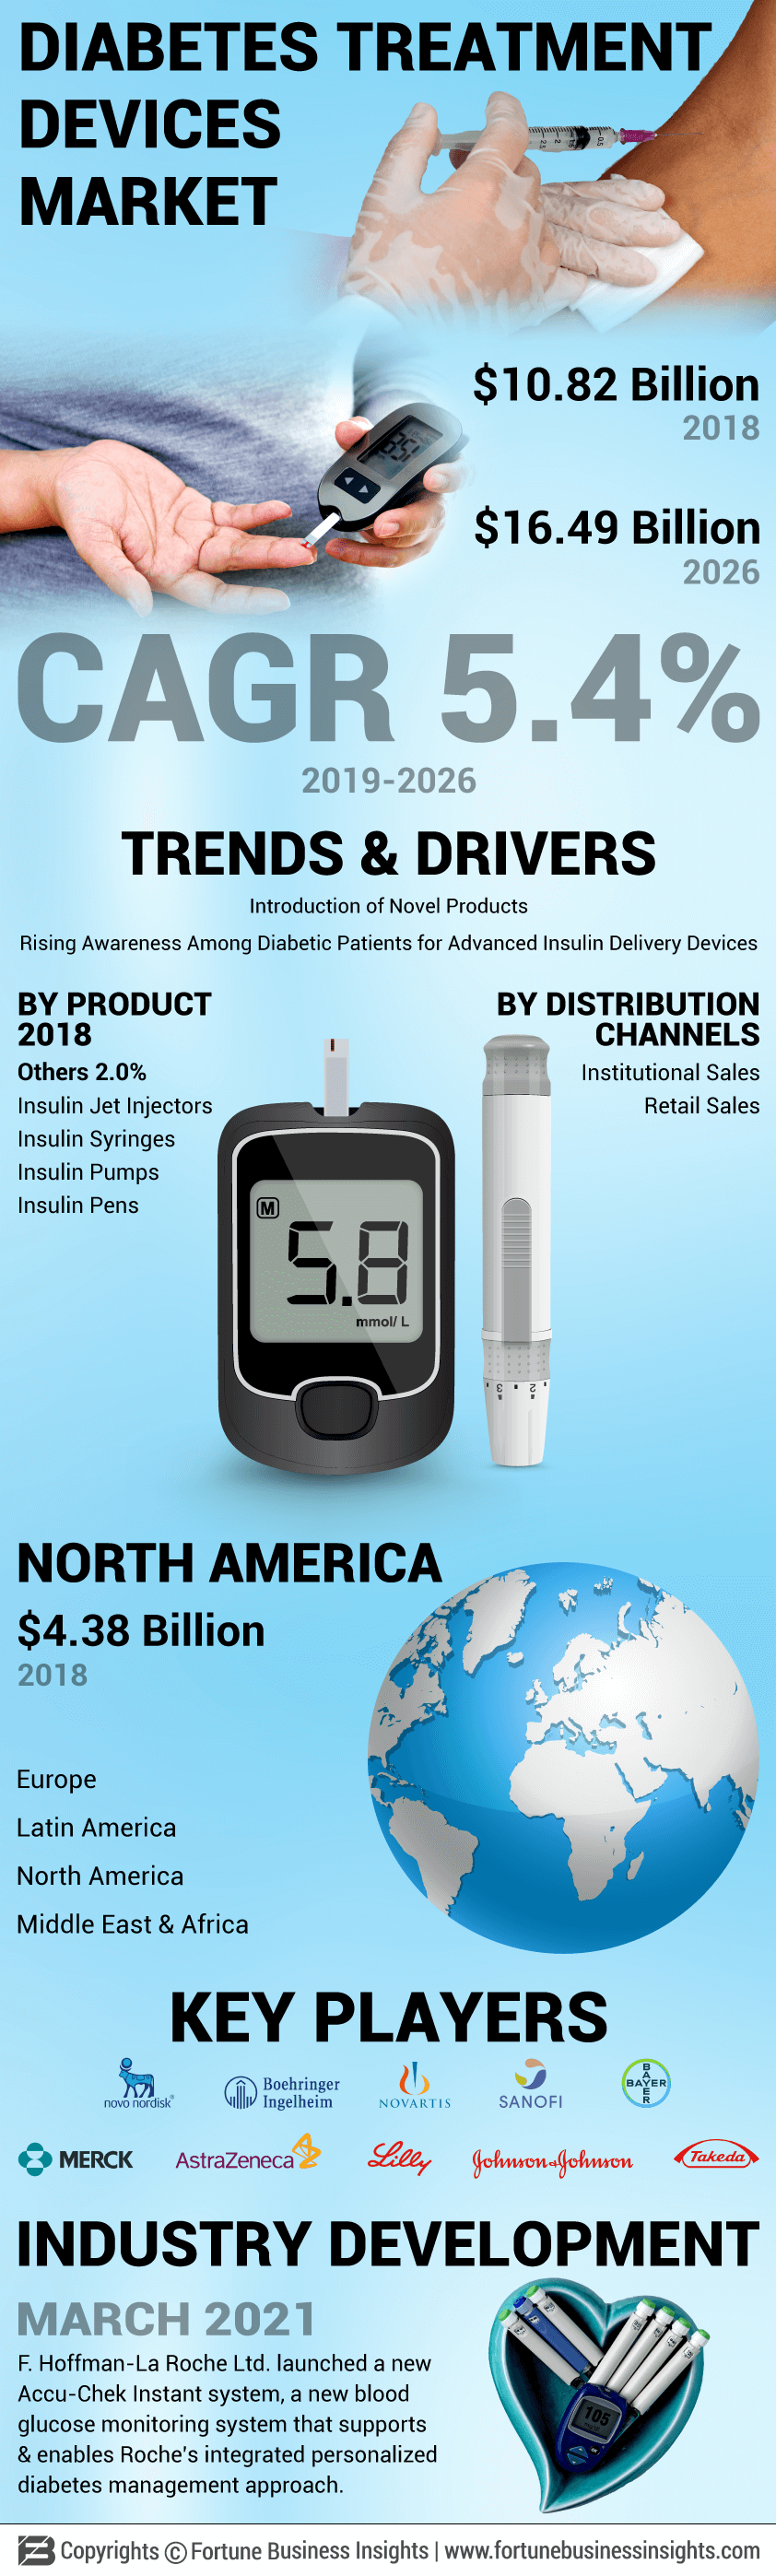 Diabetes Treatment Devices Market